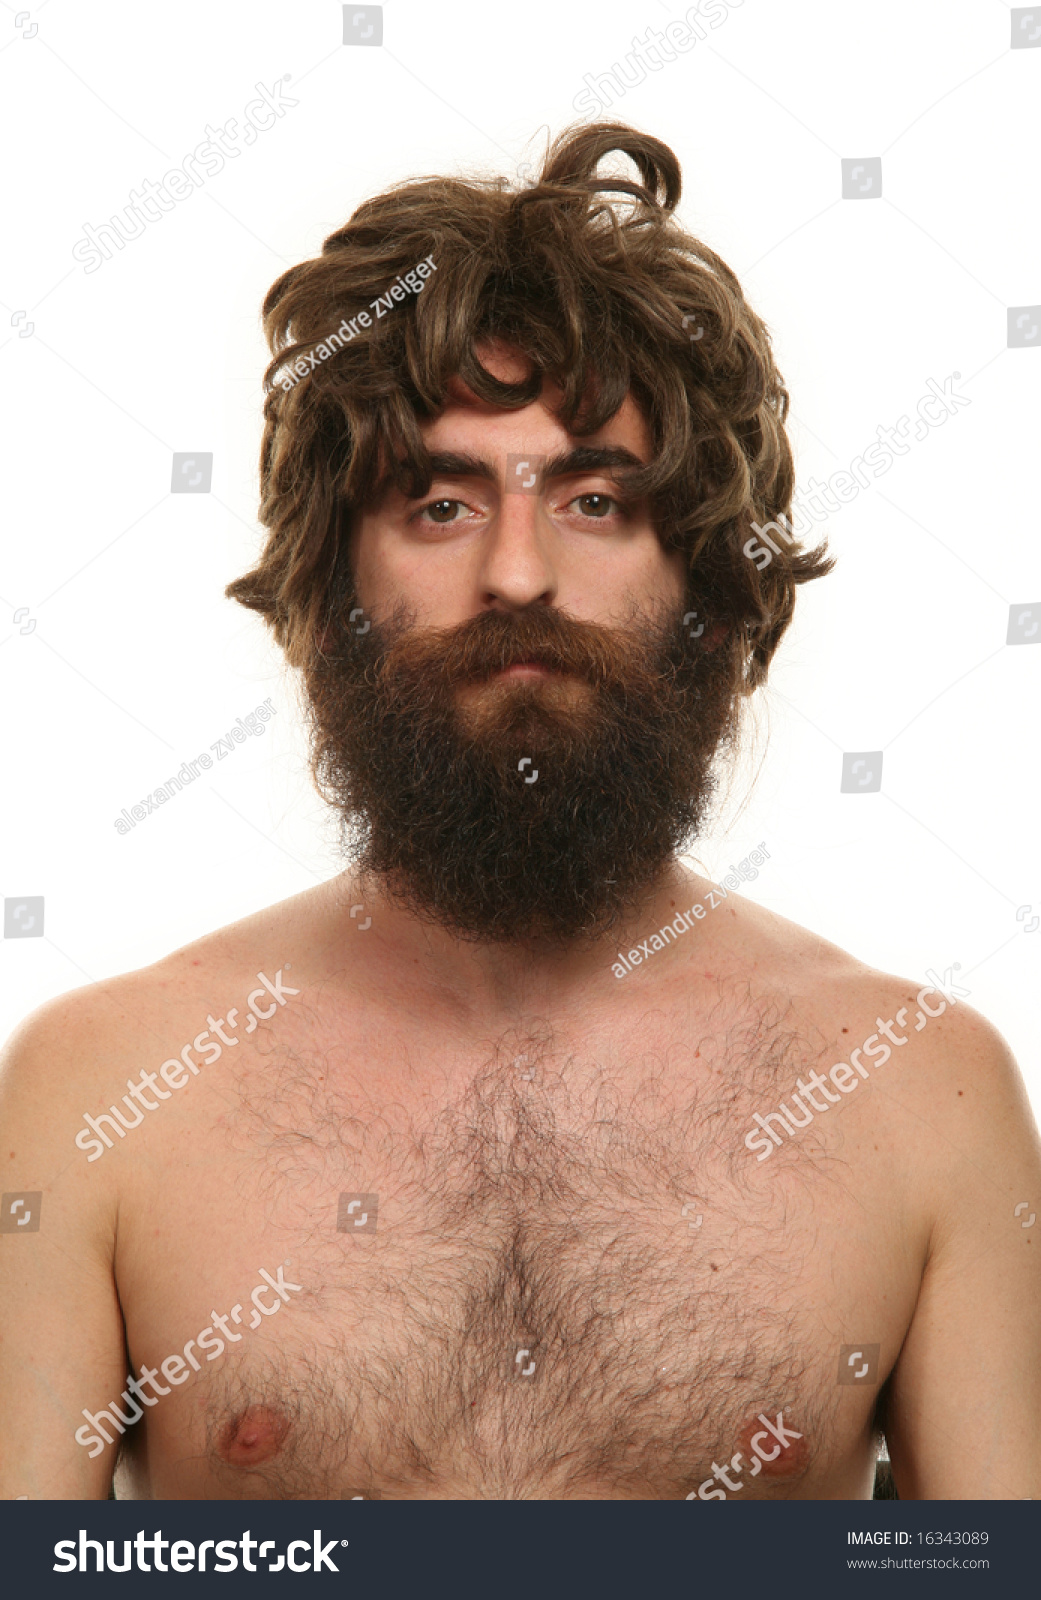 грудь у мужчин на бороде фото 85